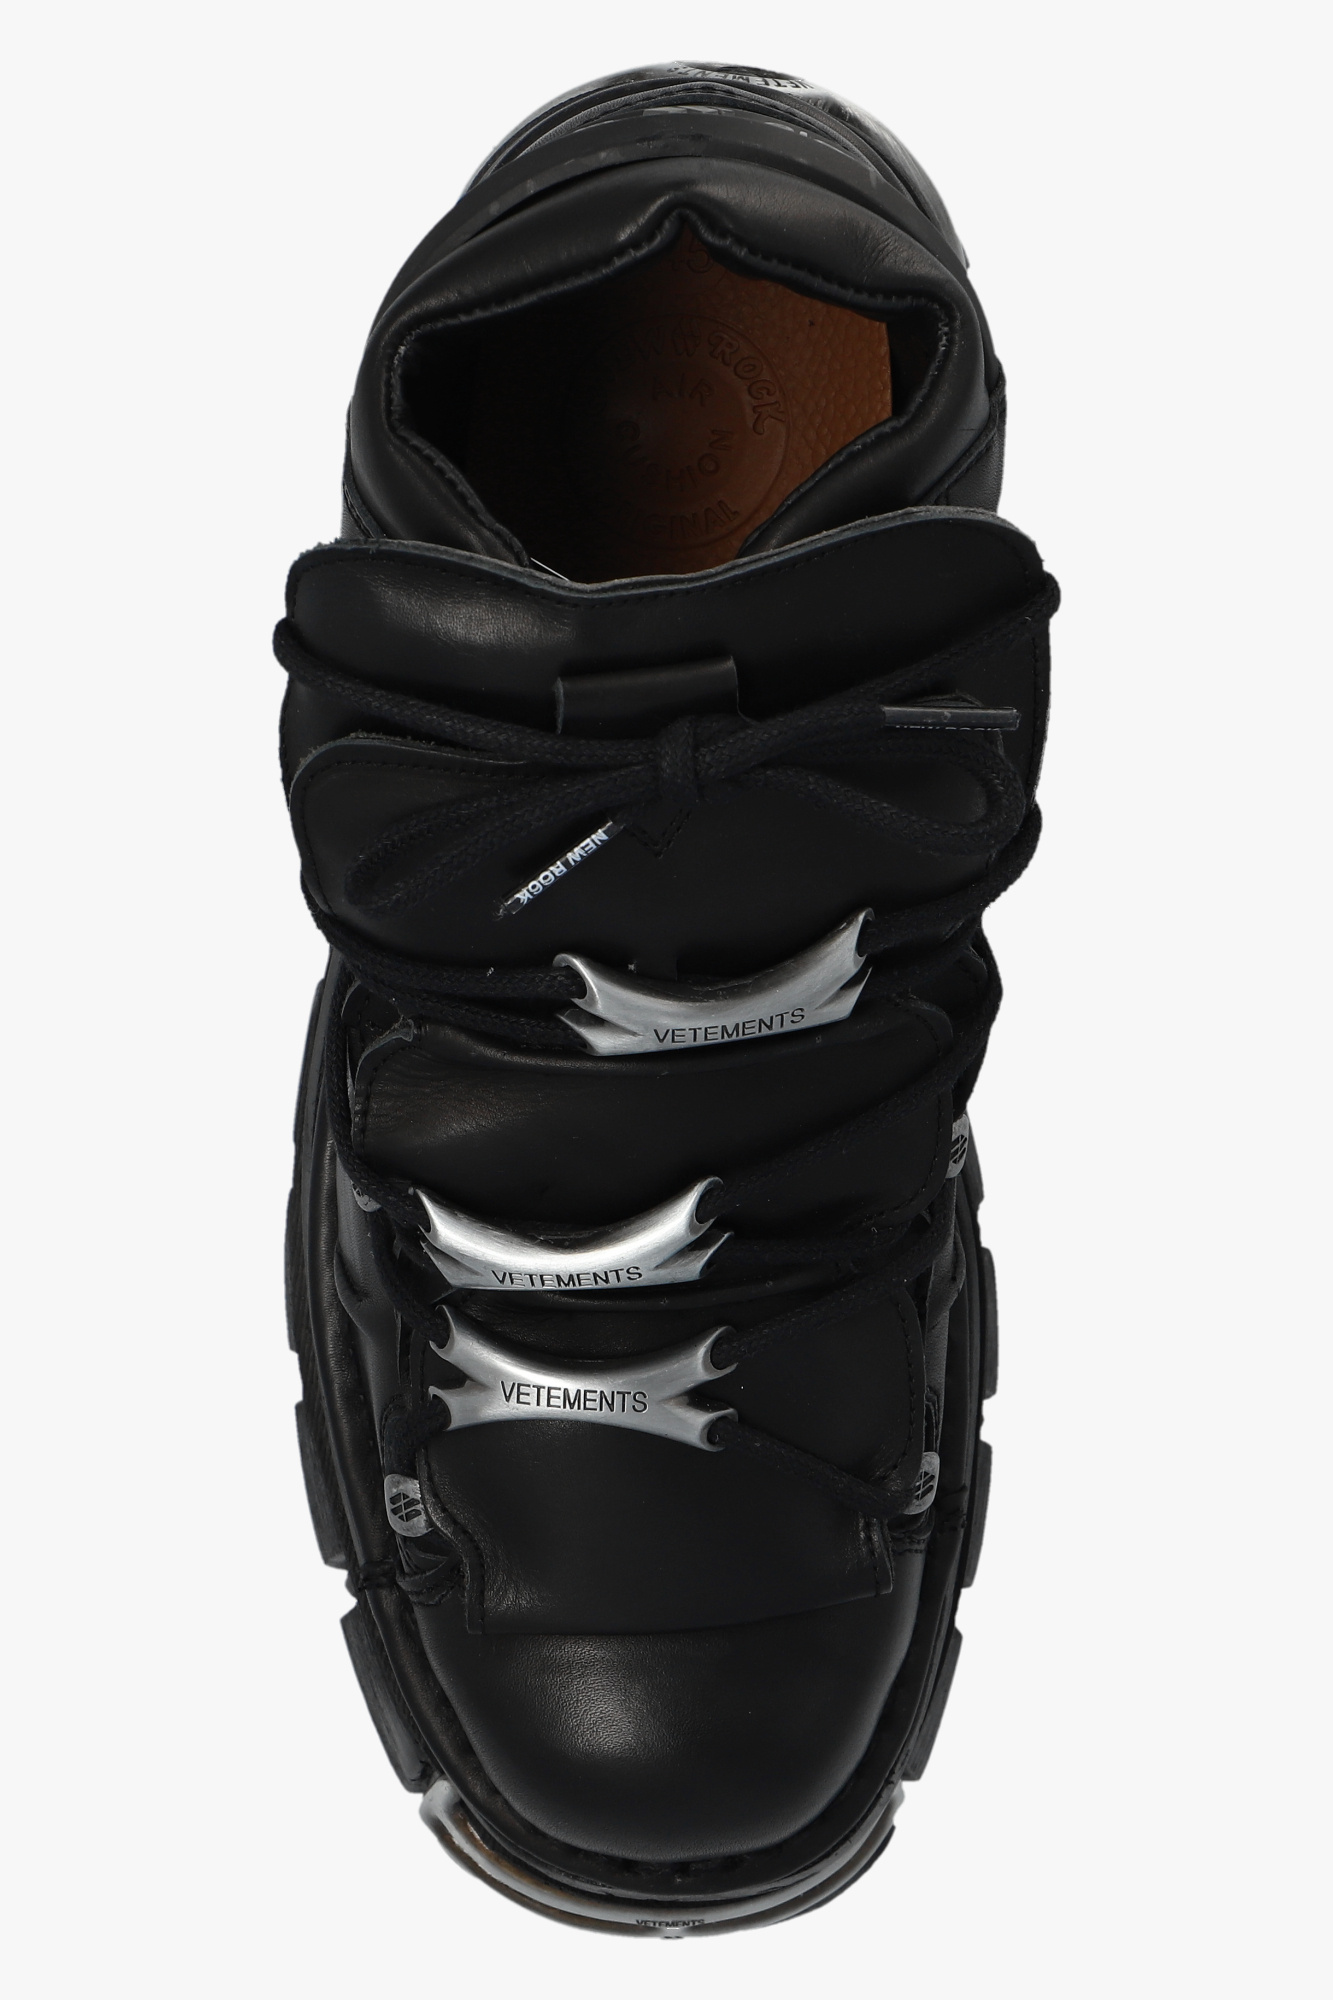 VETEMENTS VETEMENTS mens adidas samba athletic shoes sz 7 m used black